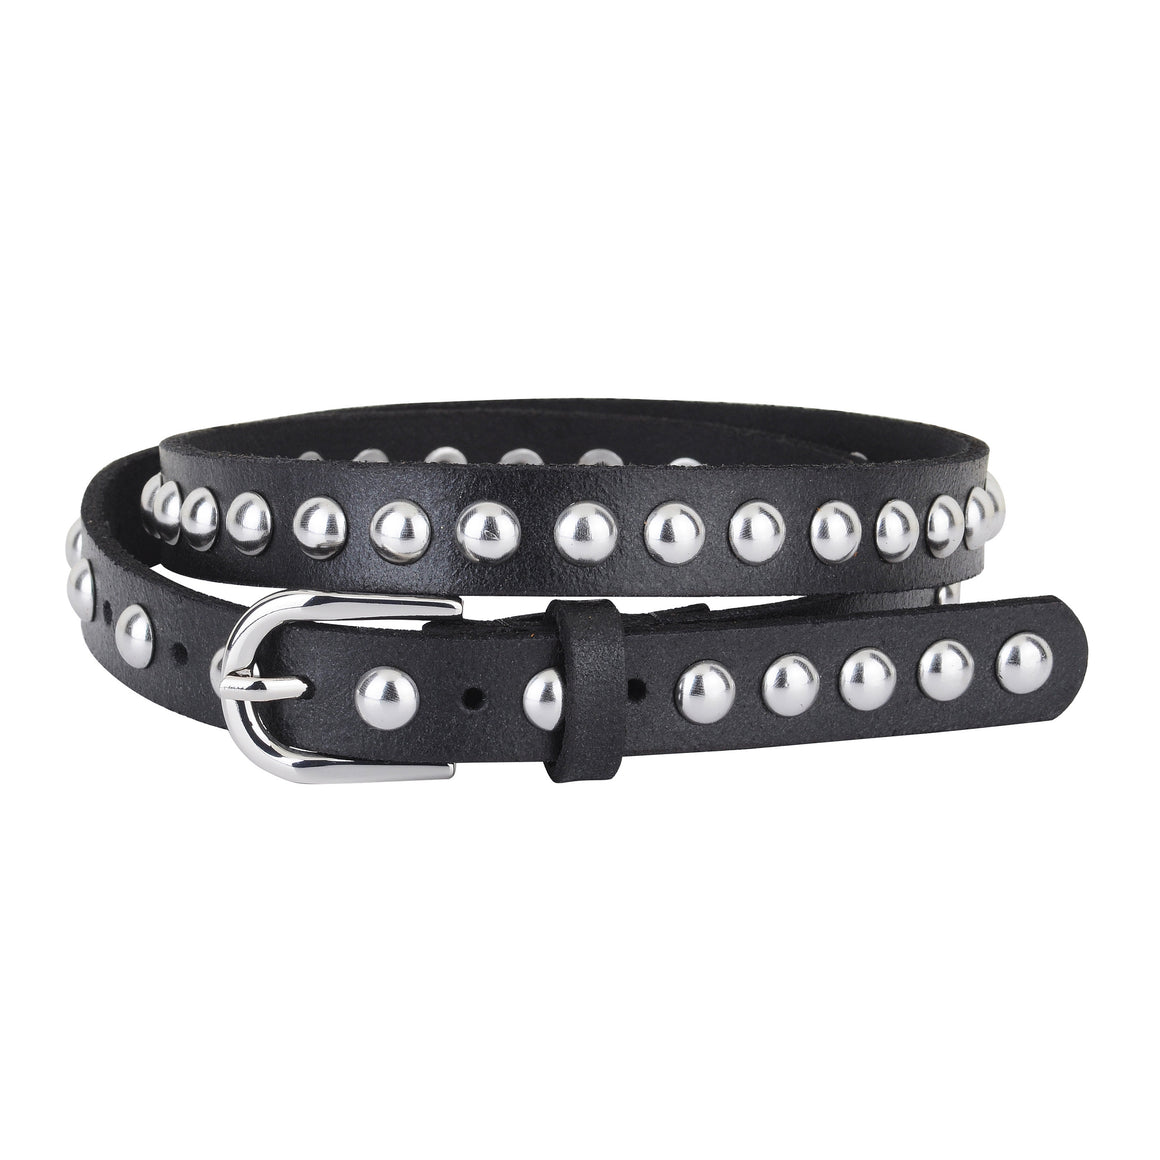 5092 - Skinny Punk Rock Studded Leather Belt